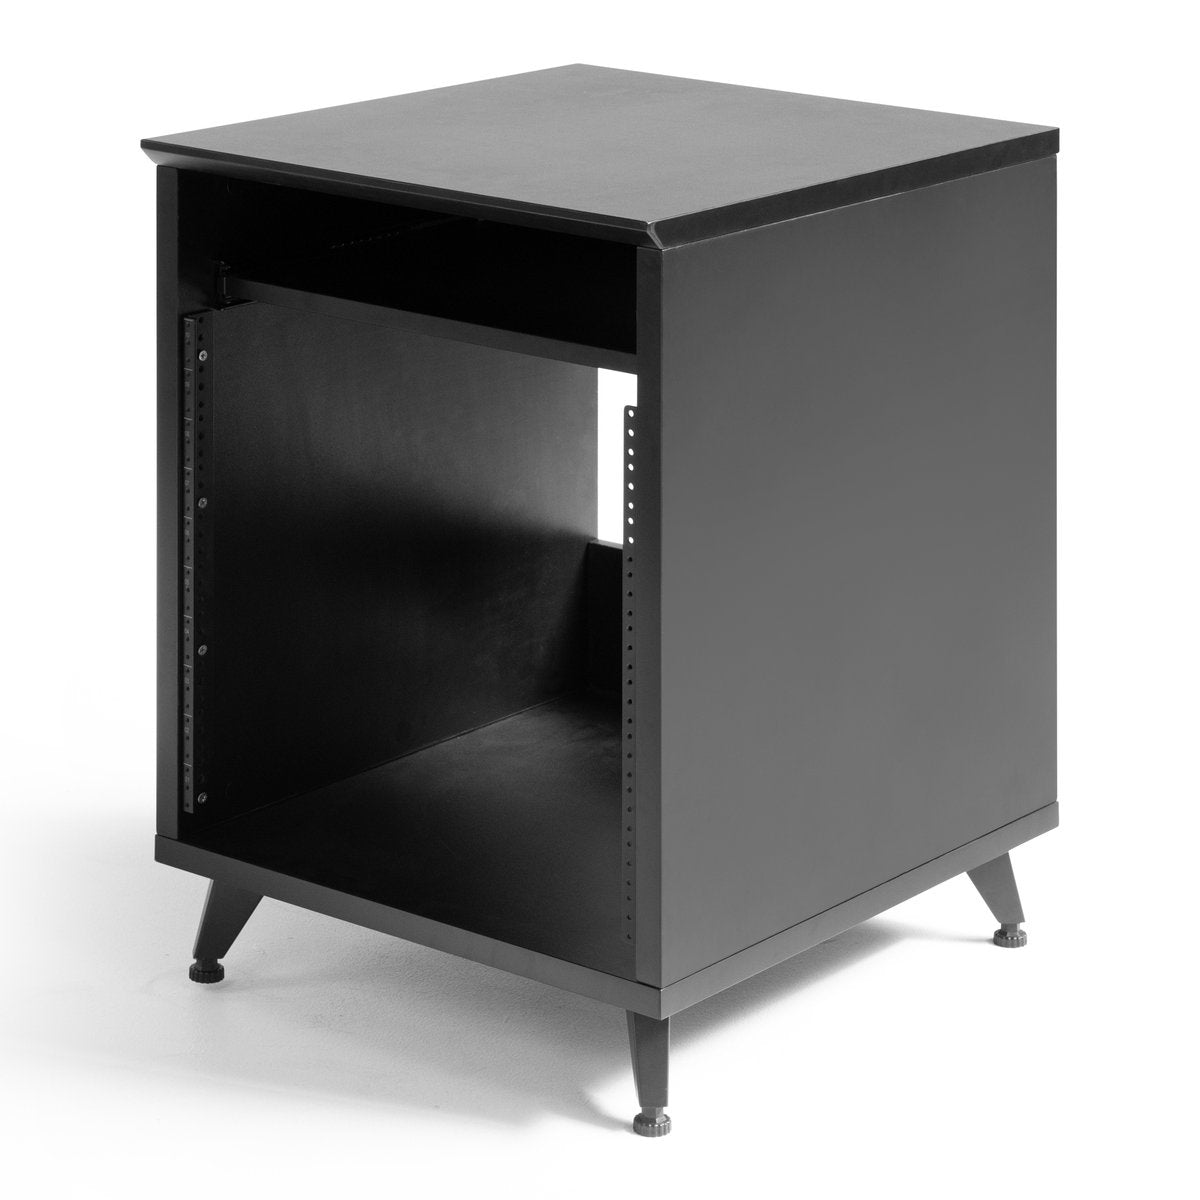 Gator Frameworks Elite Series Furniture Desk 10U Rack - Black, View 1